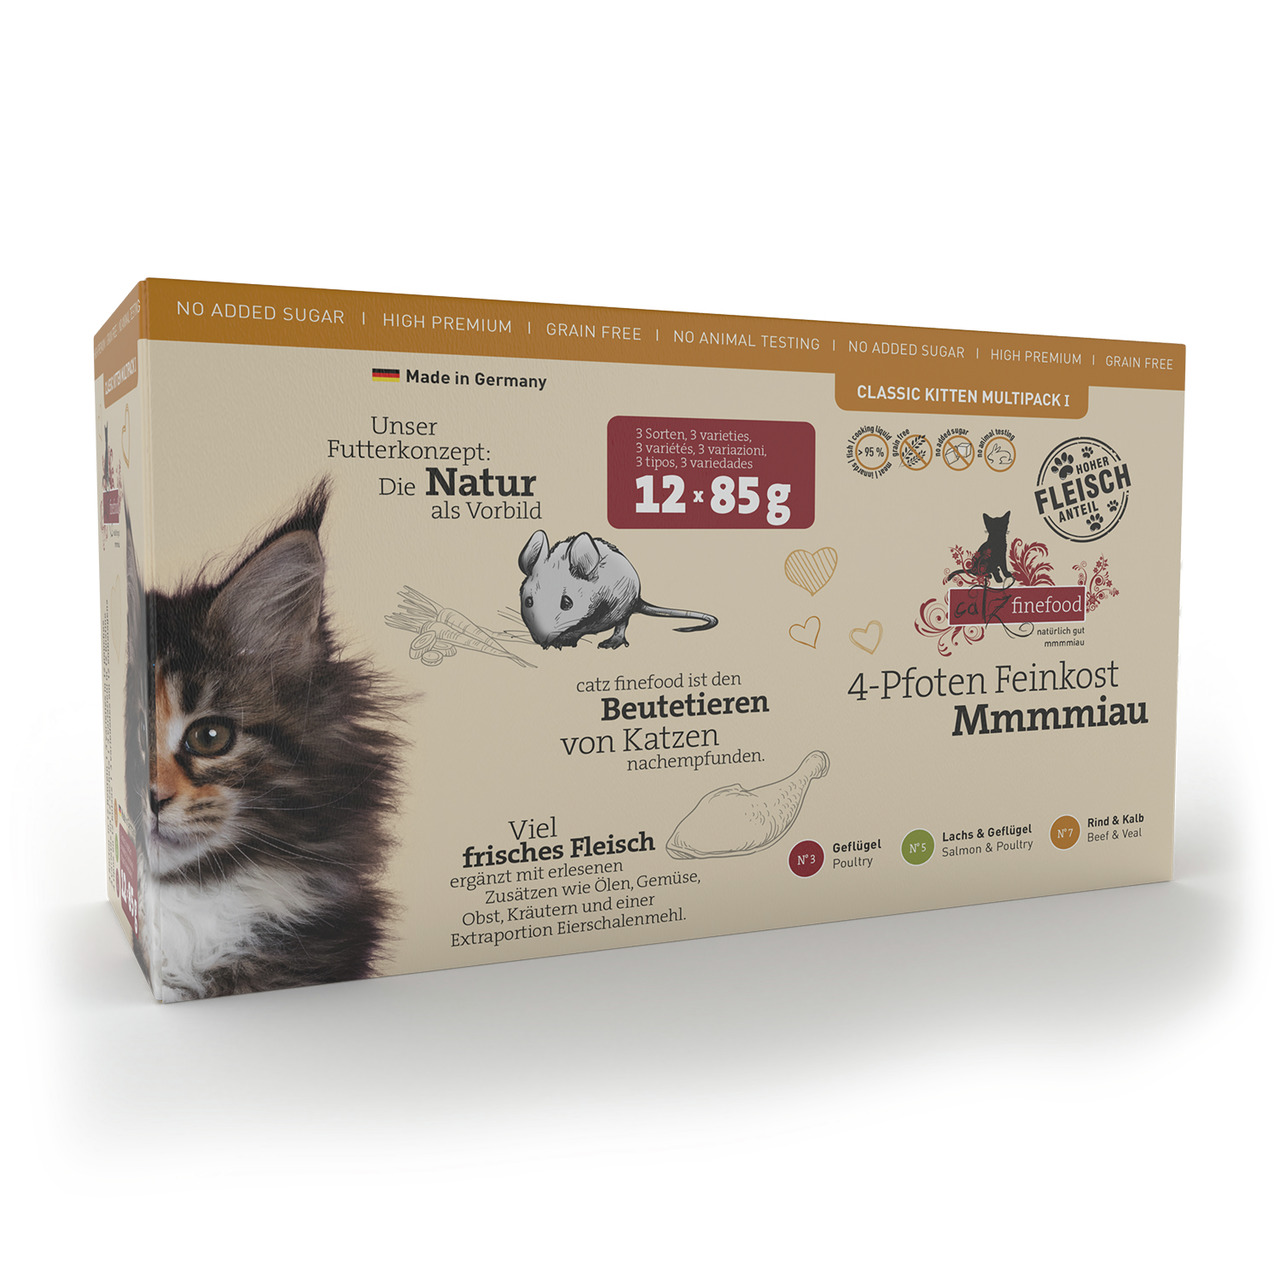 Catz finefood Classic Kitten Multipack I Katzen Nassfutter 12 x 85 g